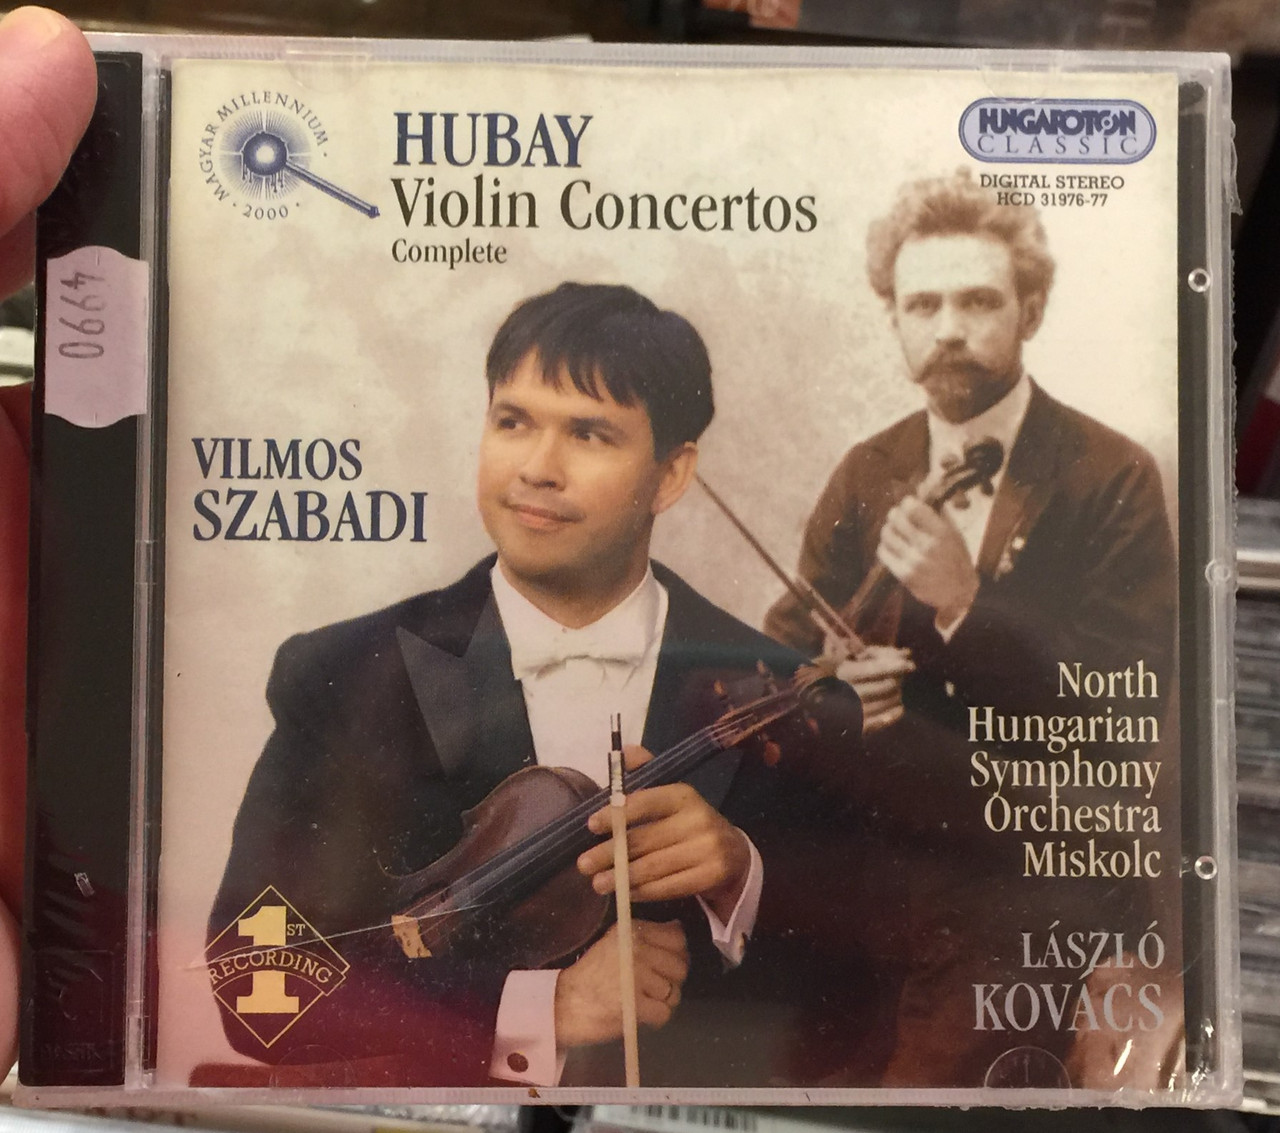 Hubay: Violin Concertos, complete / Vilmos Szabadi / North Hungarian  Symphony Orchestra Miskolc. Laszlo Kovacs / Hungaroton Classic ‎2 CD Set  2001 Stereo / HCD 31976-77 - bibleinmylanguage